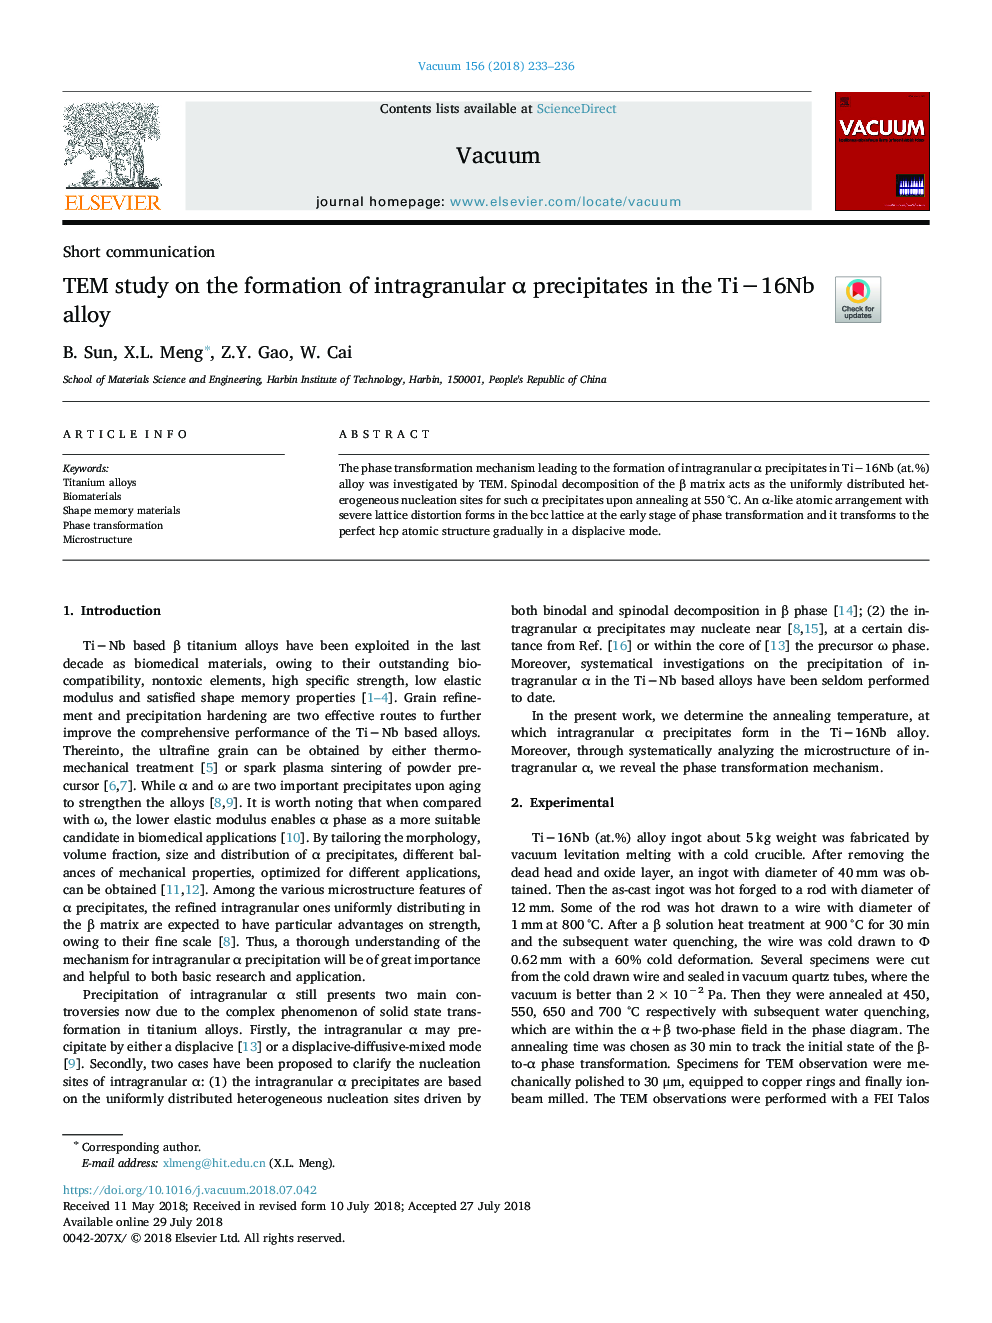 TEM study on the formation of intragranular Î± precipitates in the Tiâ16Nb alloy